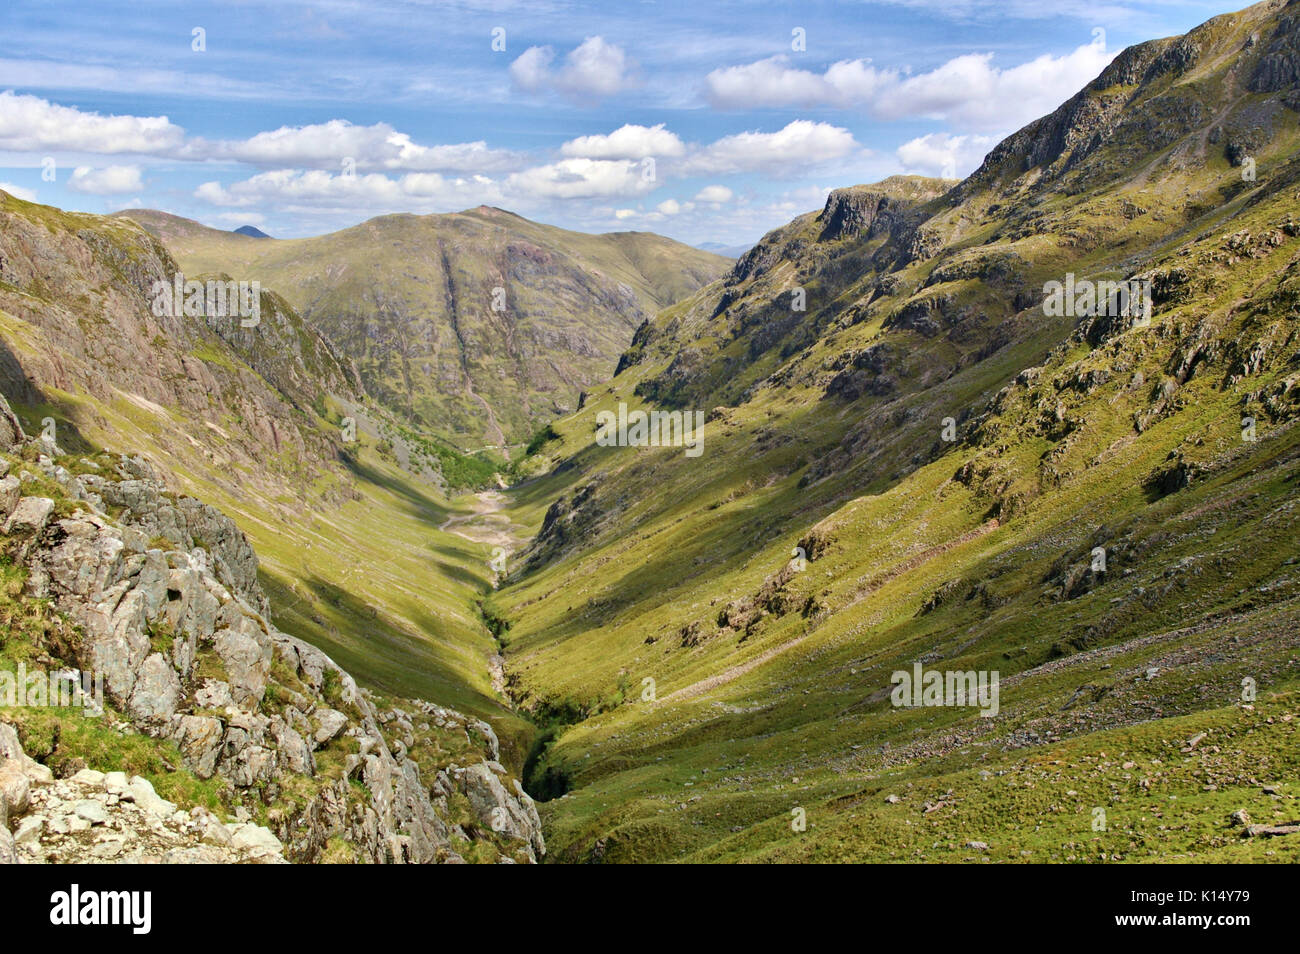 Lost Valley, Glencoe, Scotland with ridge and steep slopes Stock Photo